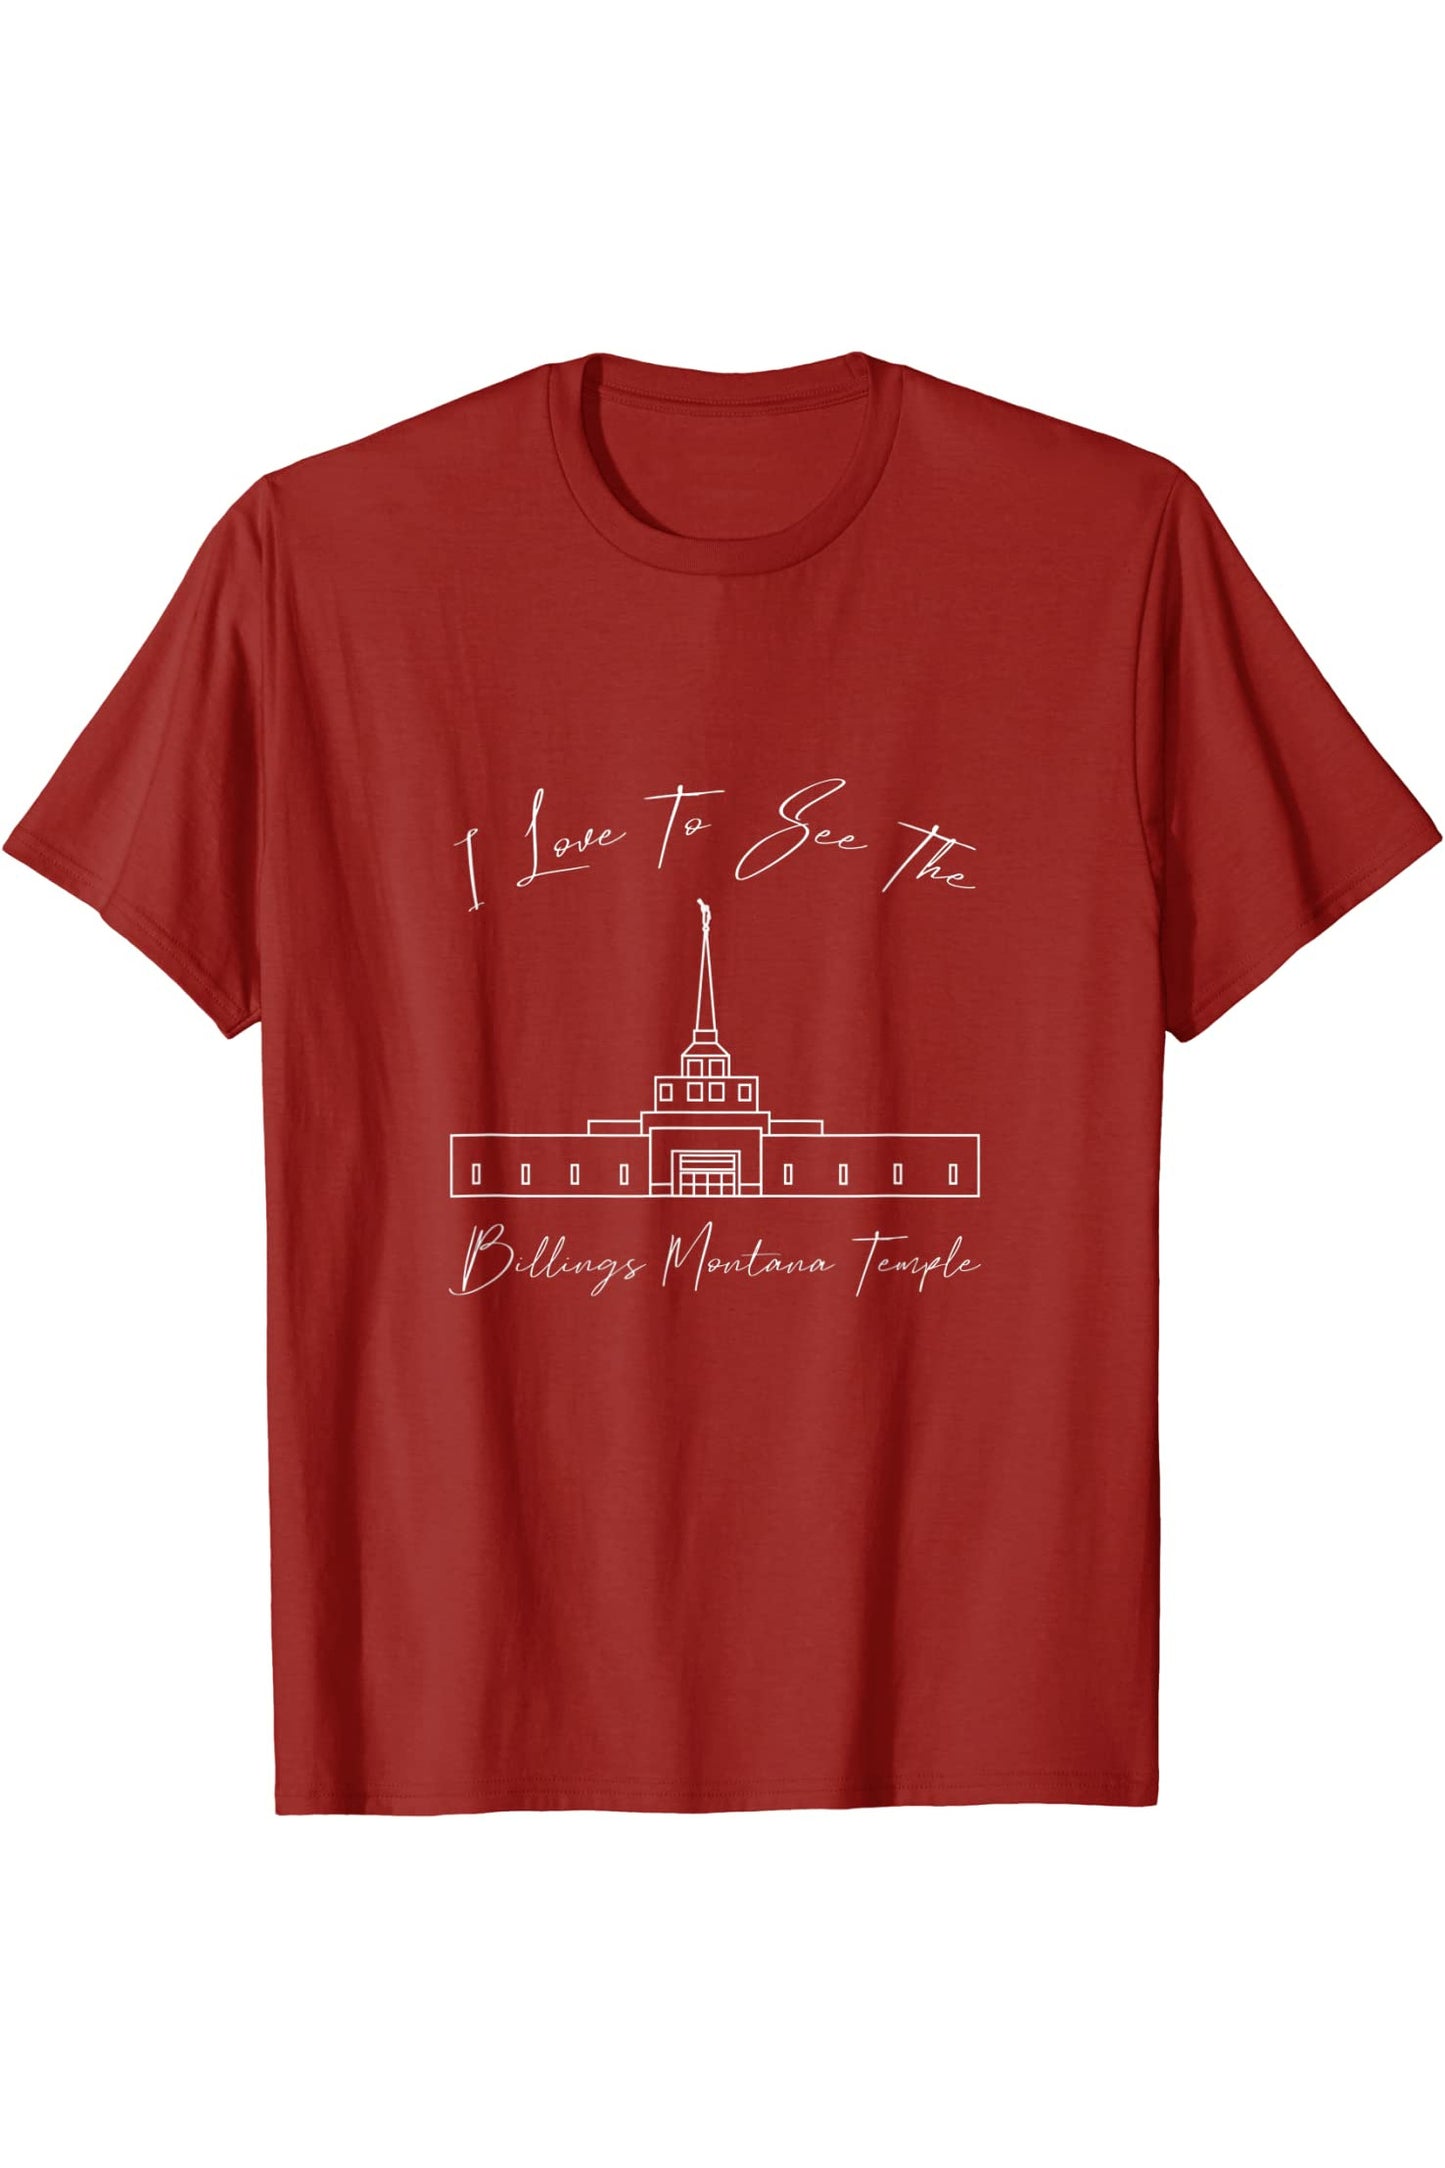 Billings Montana Temple T-Shirt - Calligraphy Style (English) US